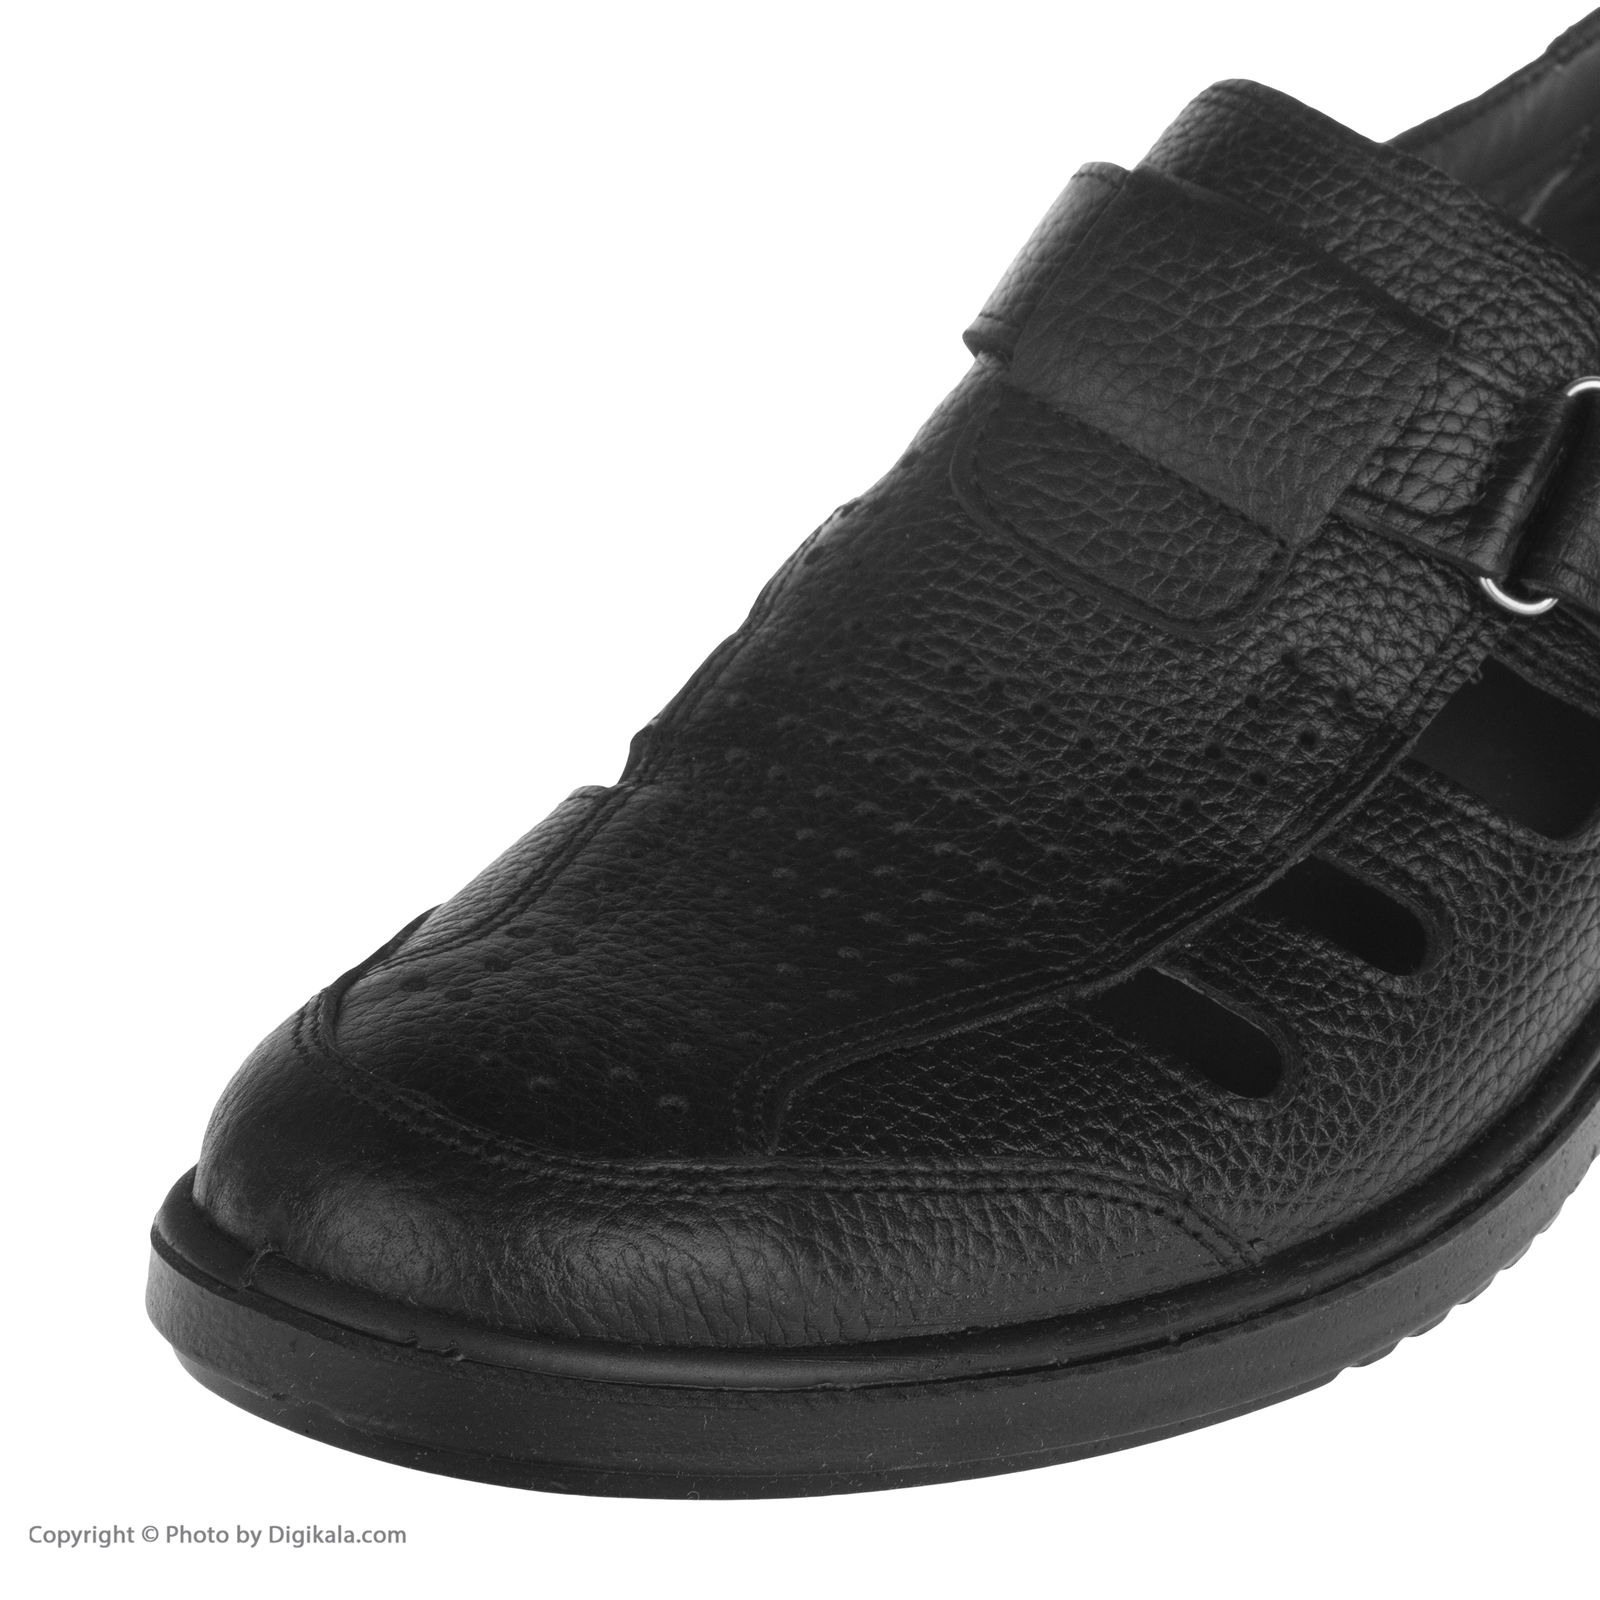  کفش روزمره مردانه واران مدل 7183h503101 -  - 7